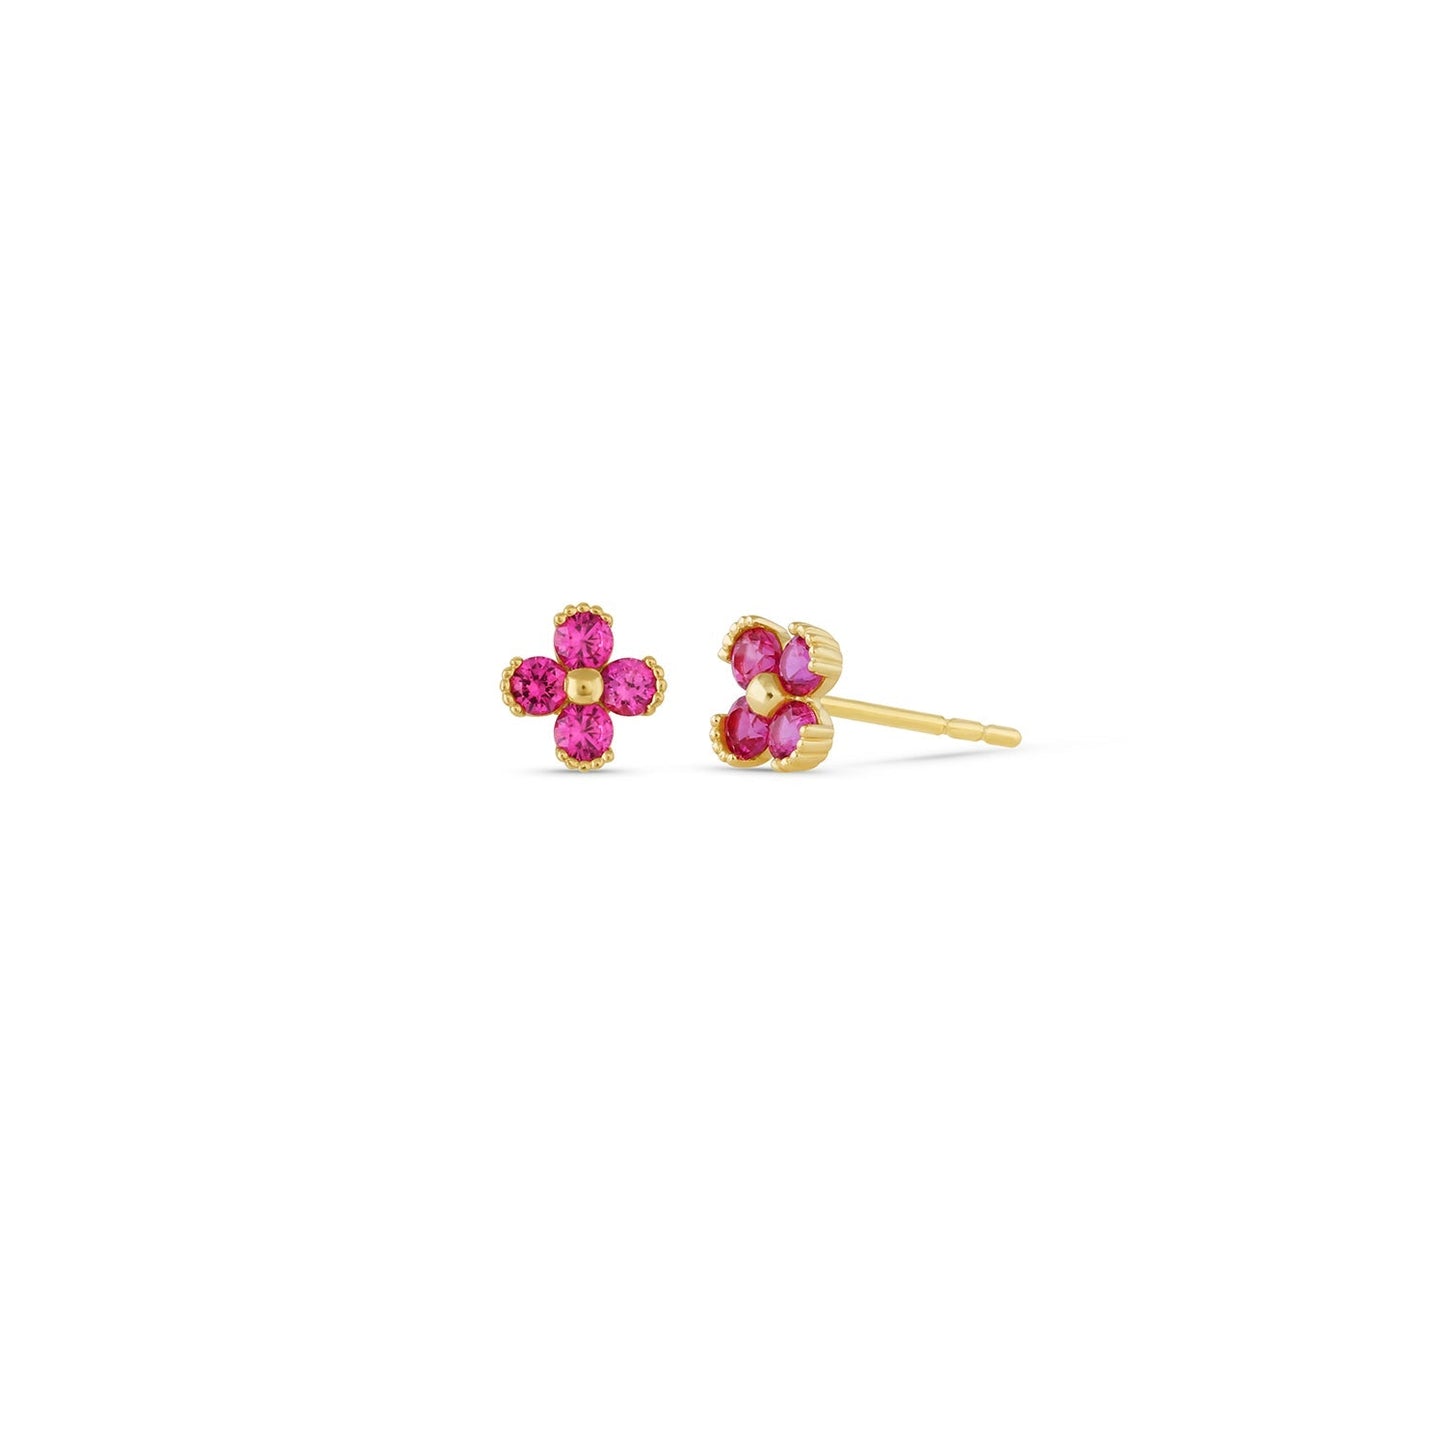 Jay 14k Solid Gold Pink Sapphire Flowers Earrings